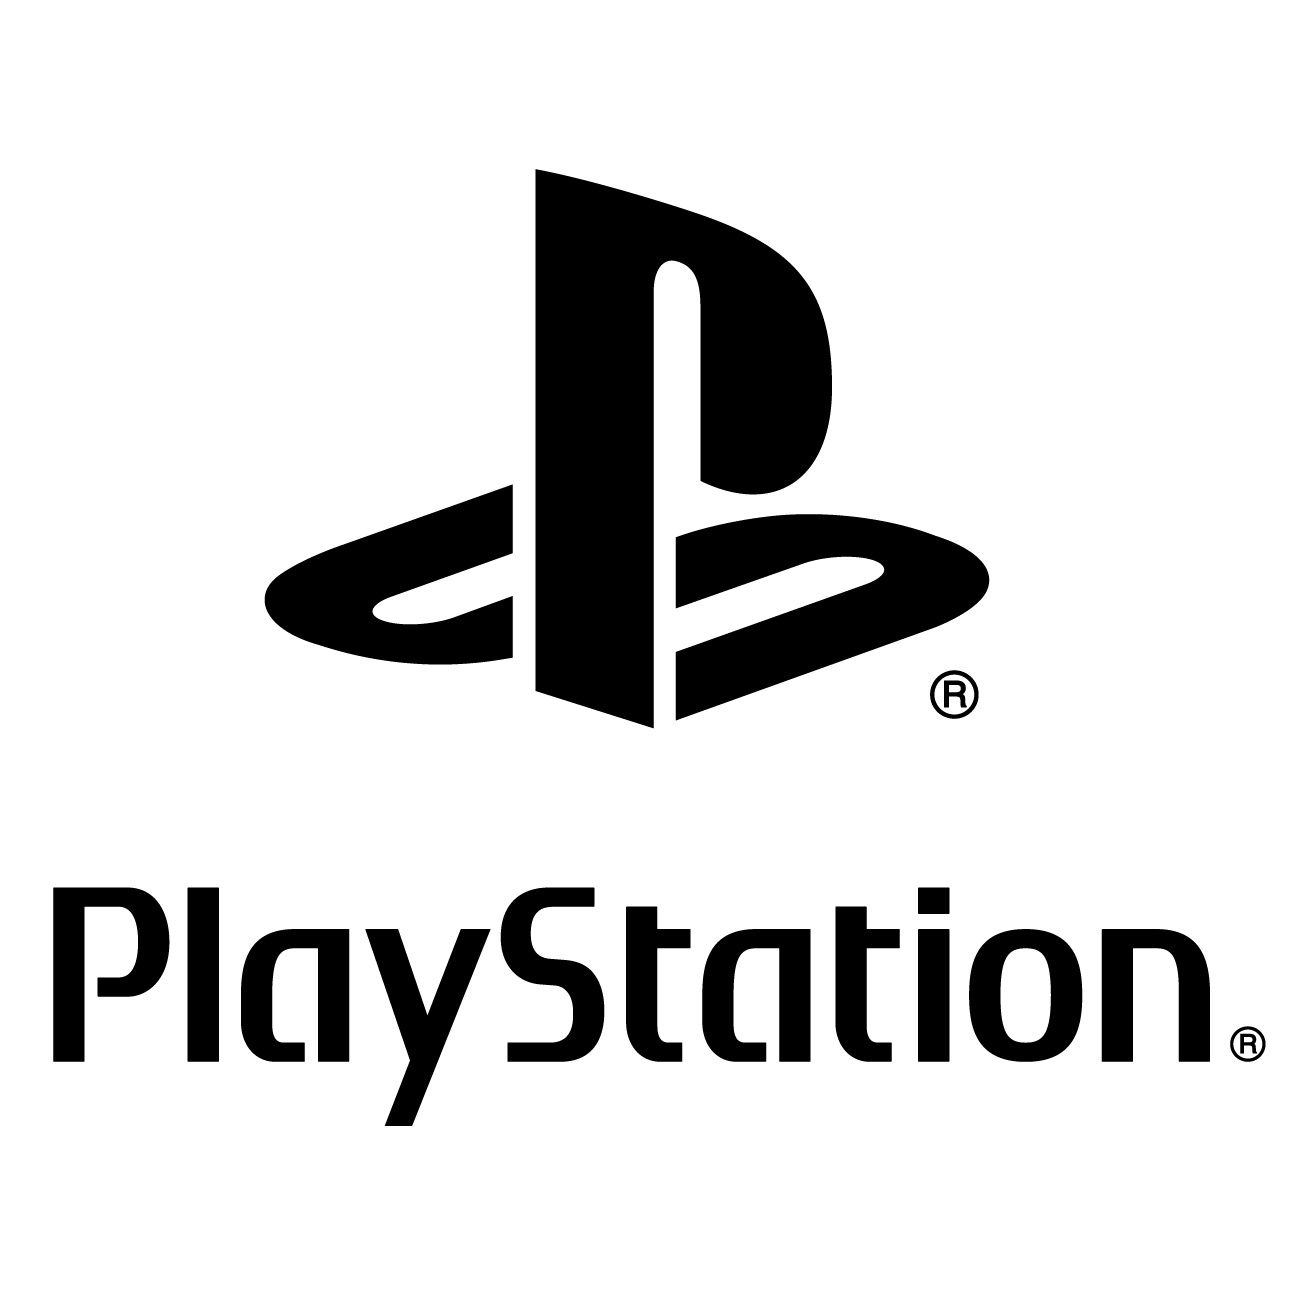 PlayStation 1 Logo - PlayStation Fiesta Bowl